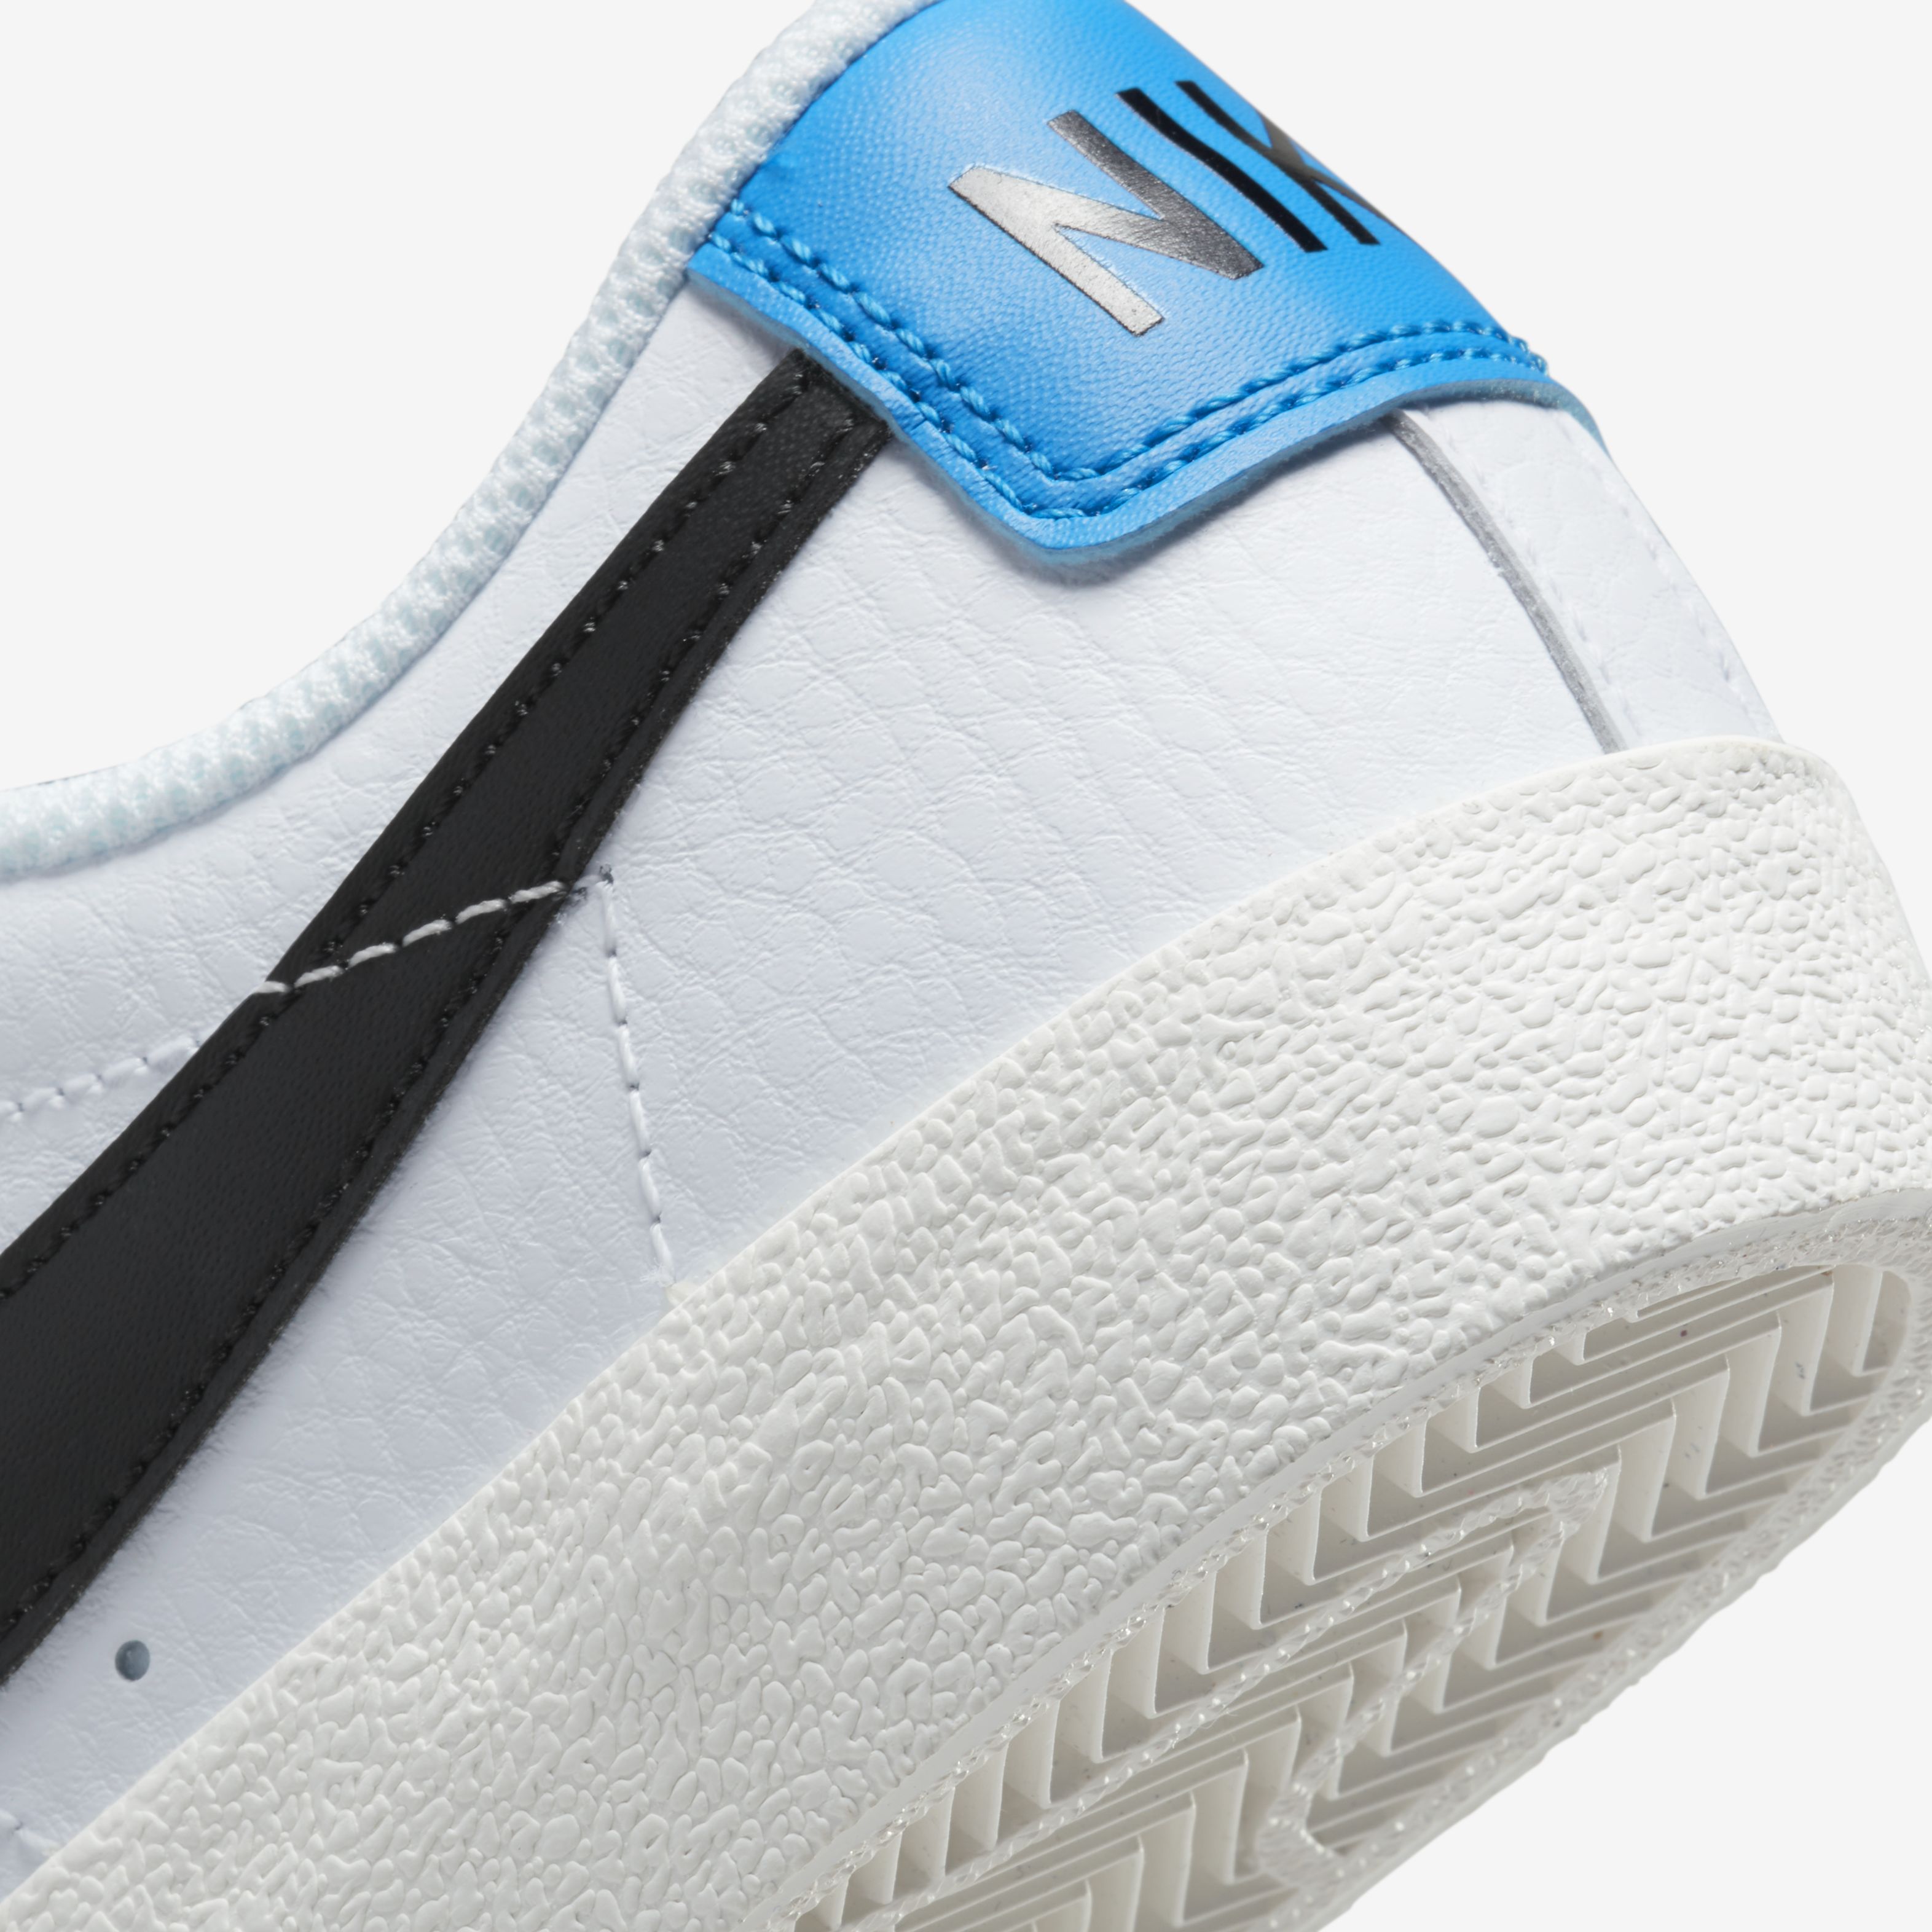 Nike Blazer Low '77, Blanco/Azul foto claro/Vela/Negro, hi-res